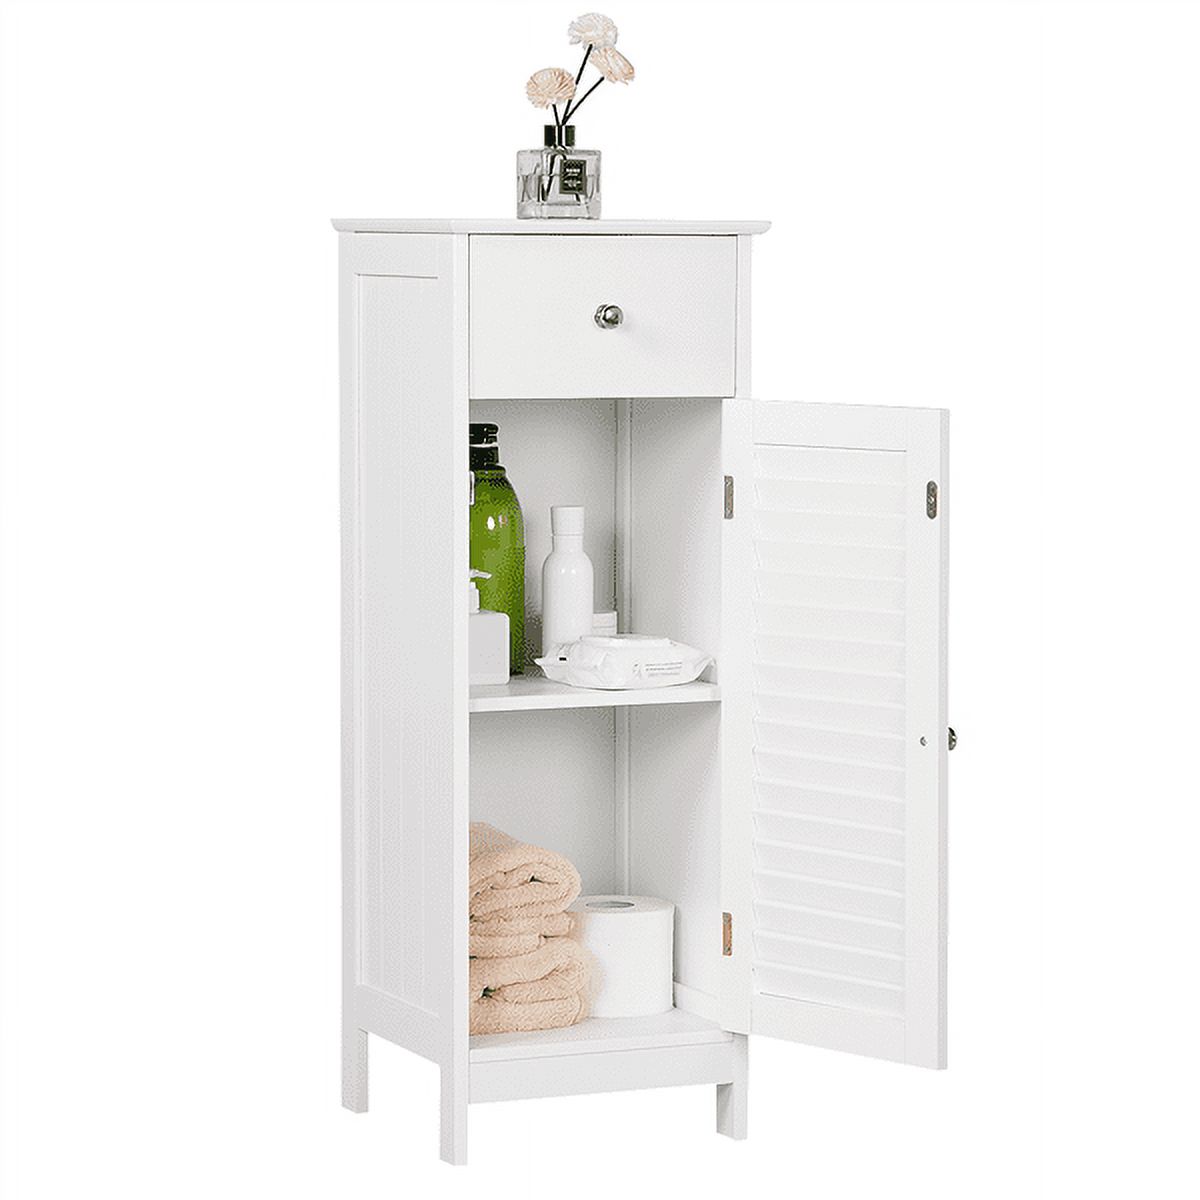 Topeakmart Bathroom Kitchen Floor Storage Cabinet with Drawer and Single Shutter Door White - image 5 of 15